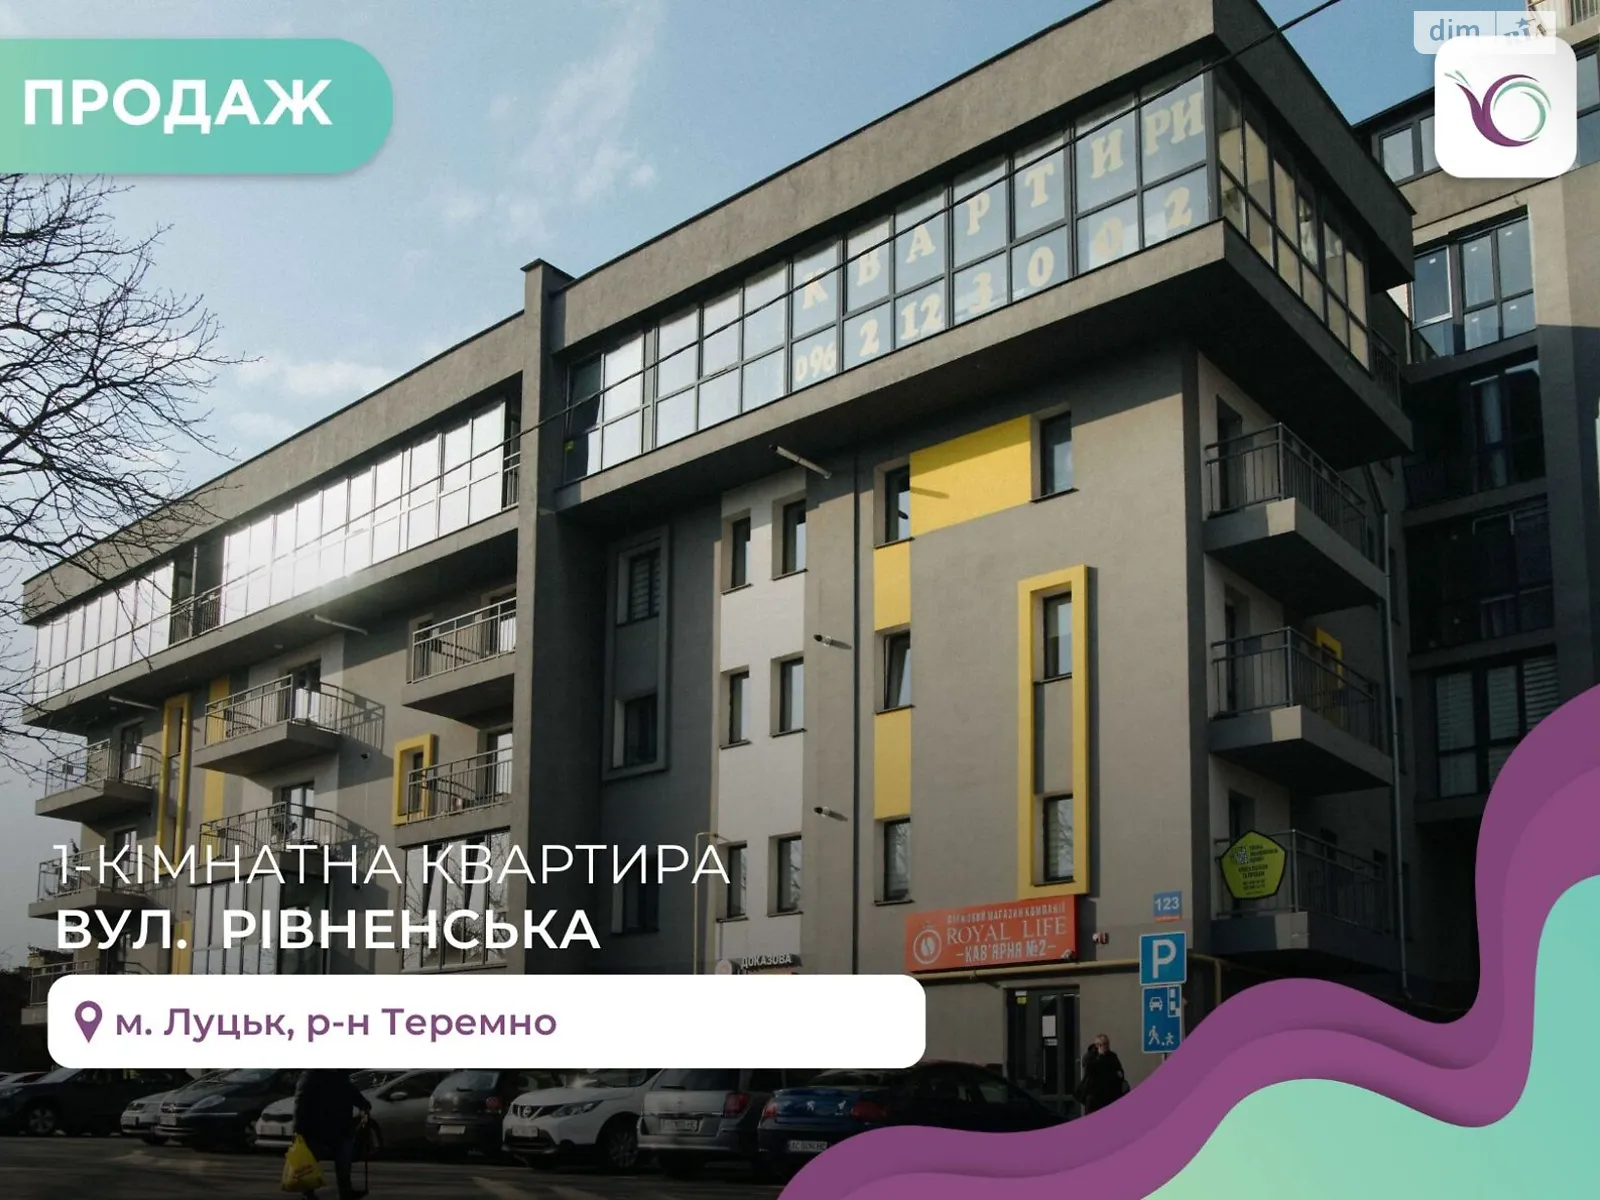 1-кімнатна квартира 52 кв. м у Луцьку, цена: 40000 $